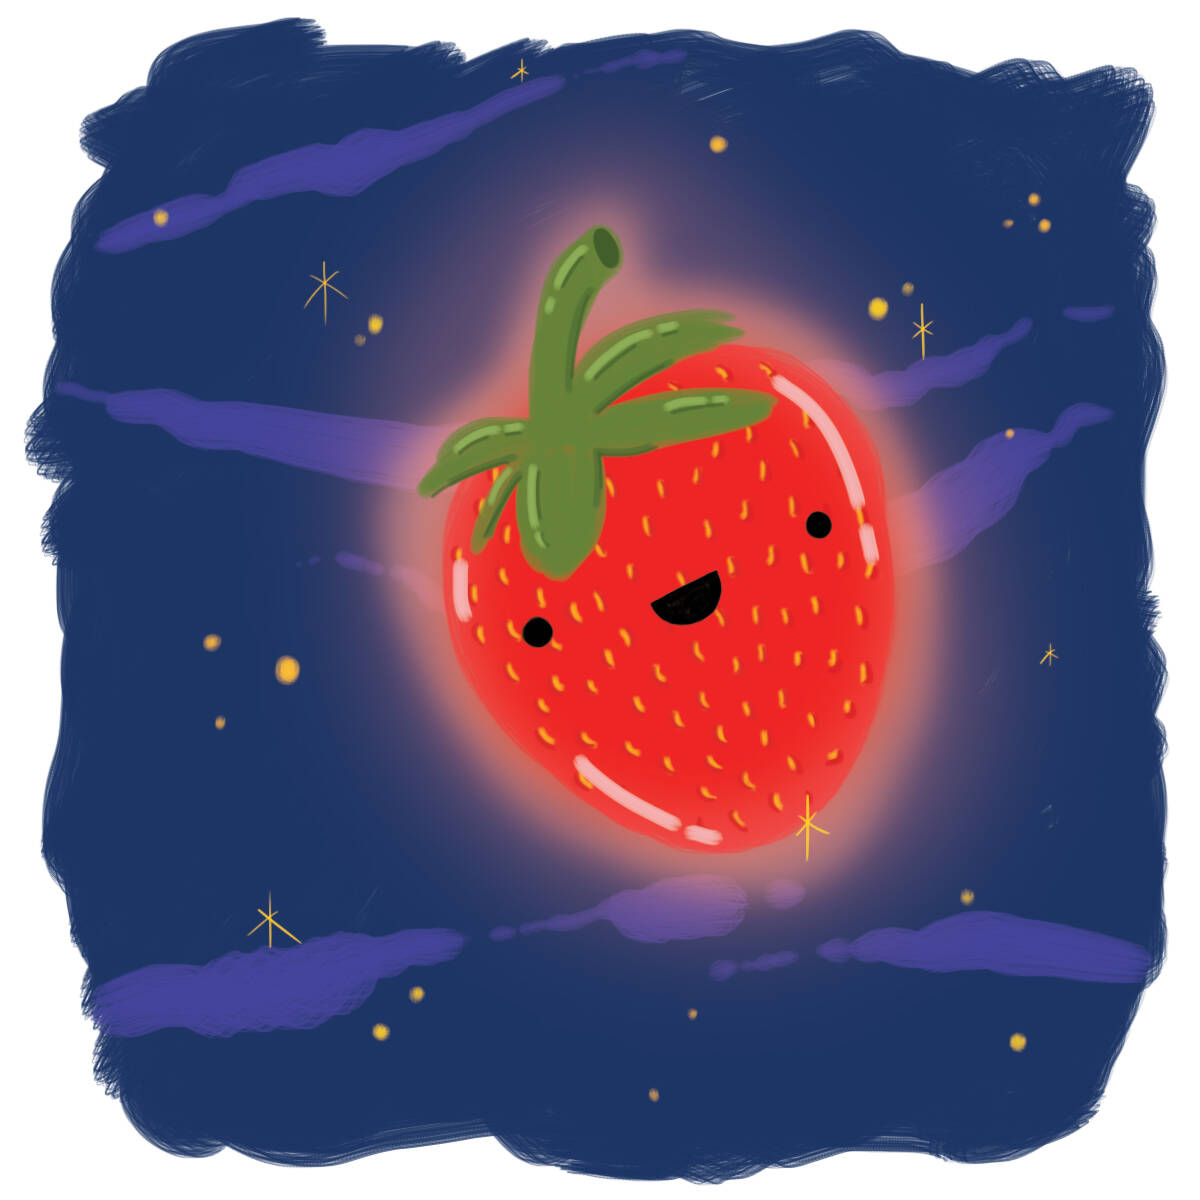 Strawberry Moon when rare events build common ground